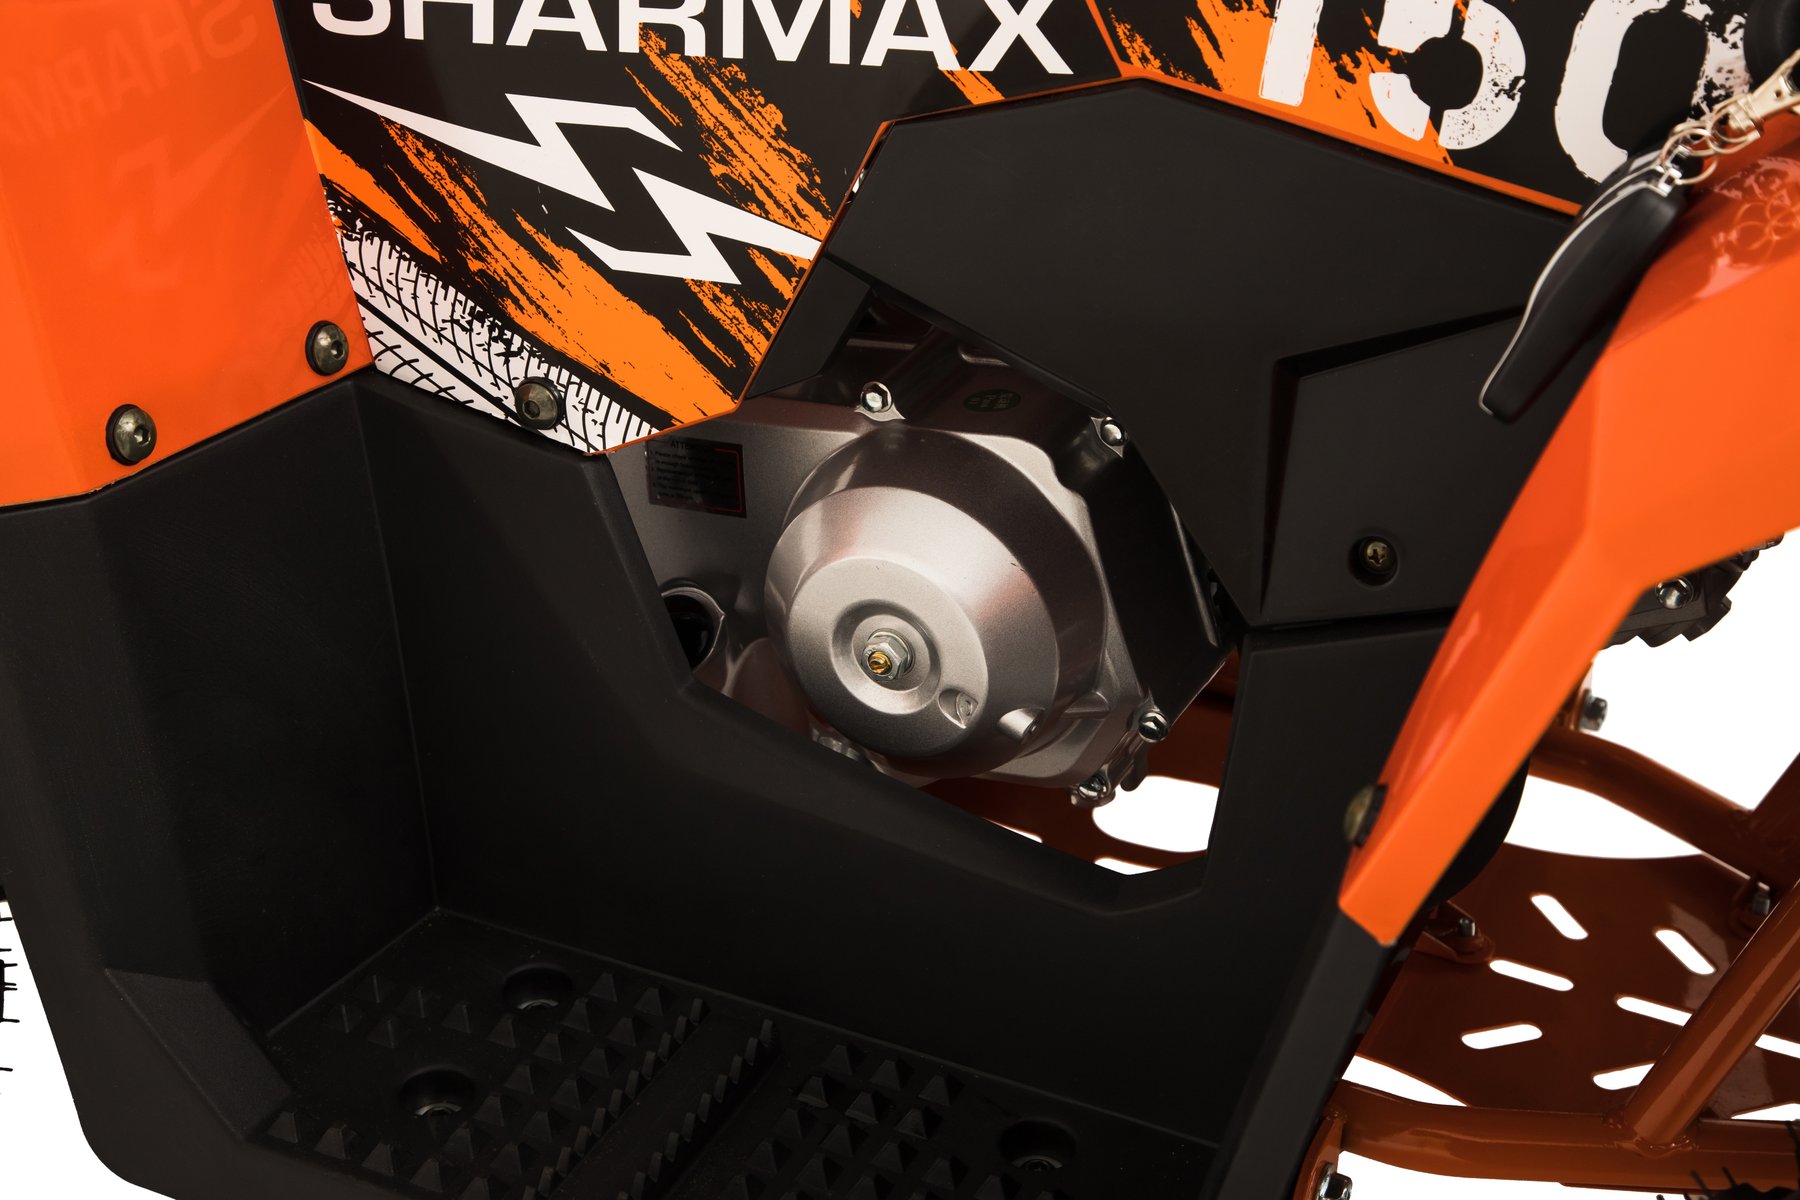 SHARMAX 150 CROSS